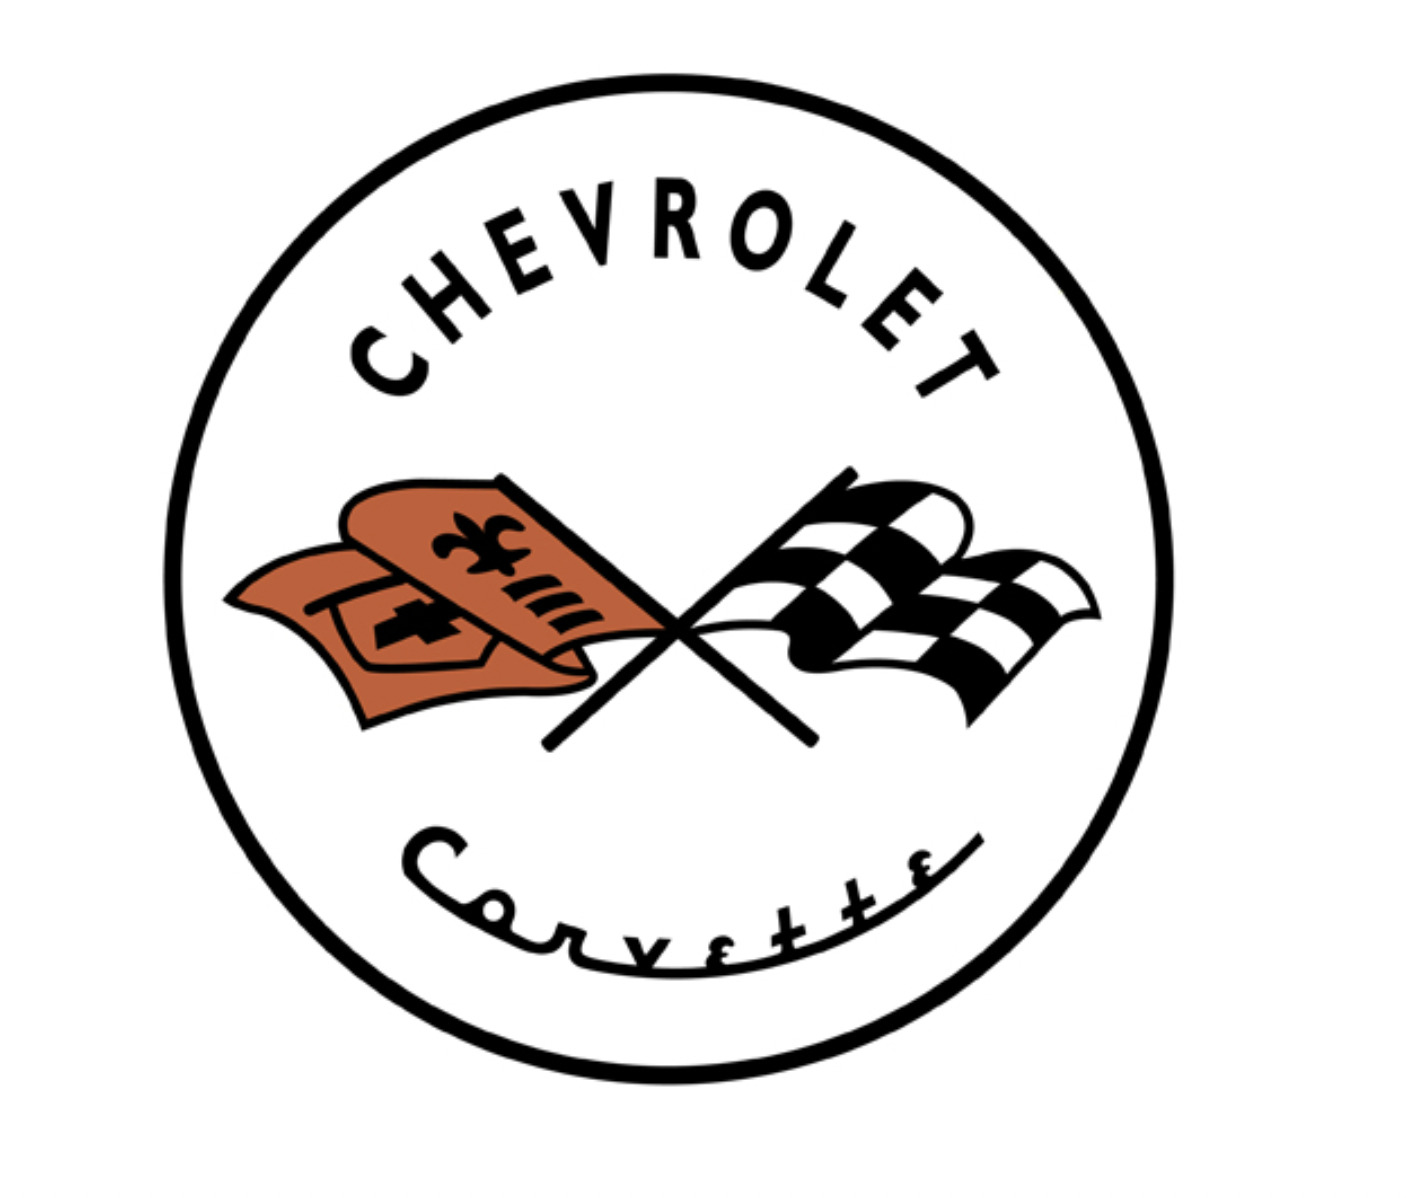 Vintage Chevy Chevrolet Corvette Vinyl Sticker Decal 